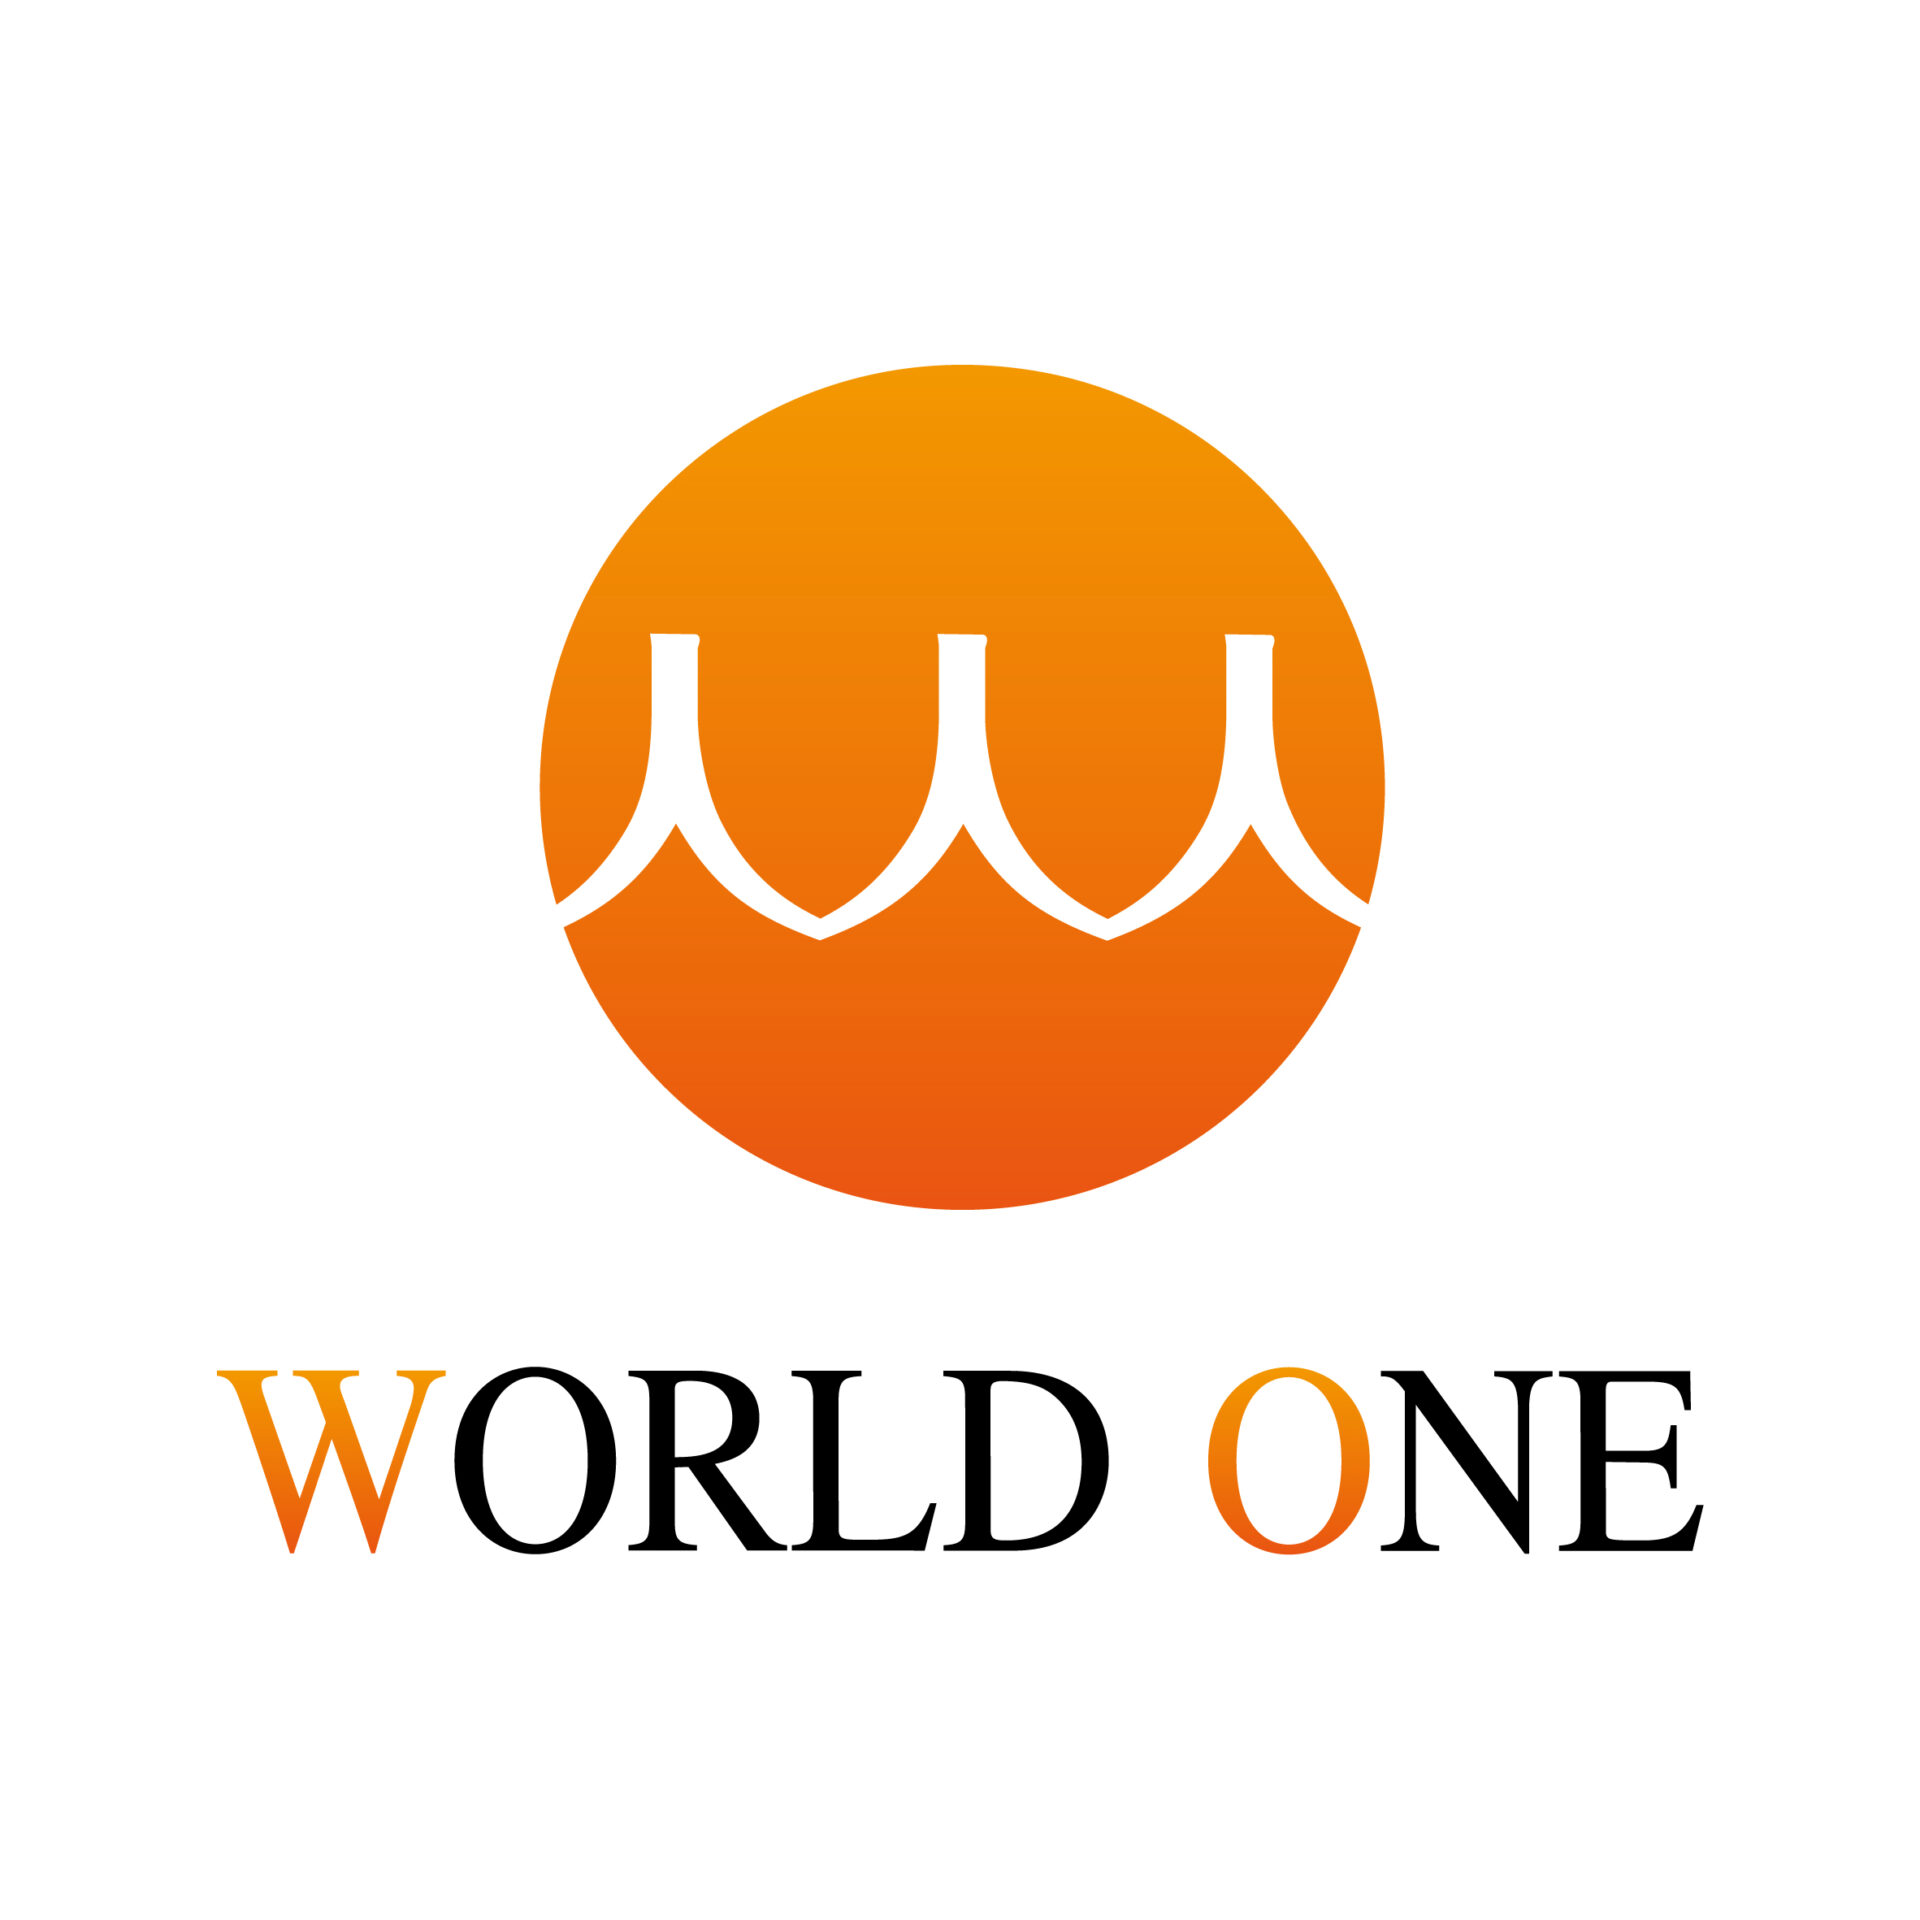 WORLD ONE